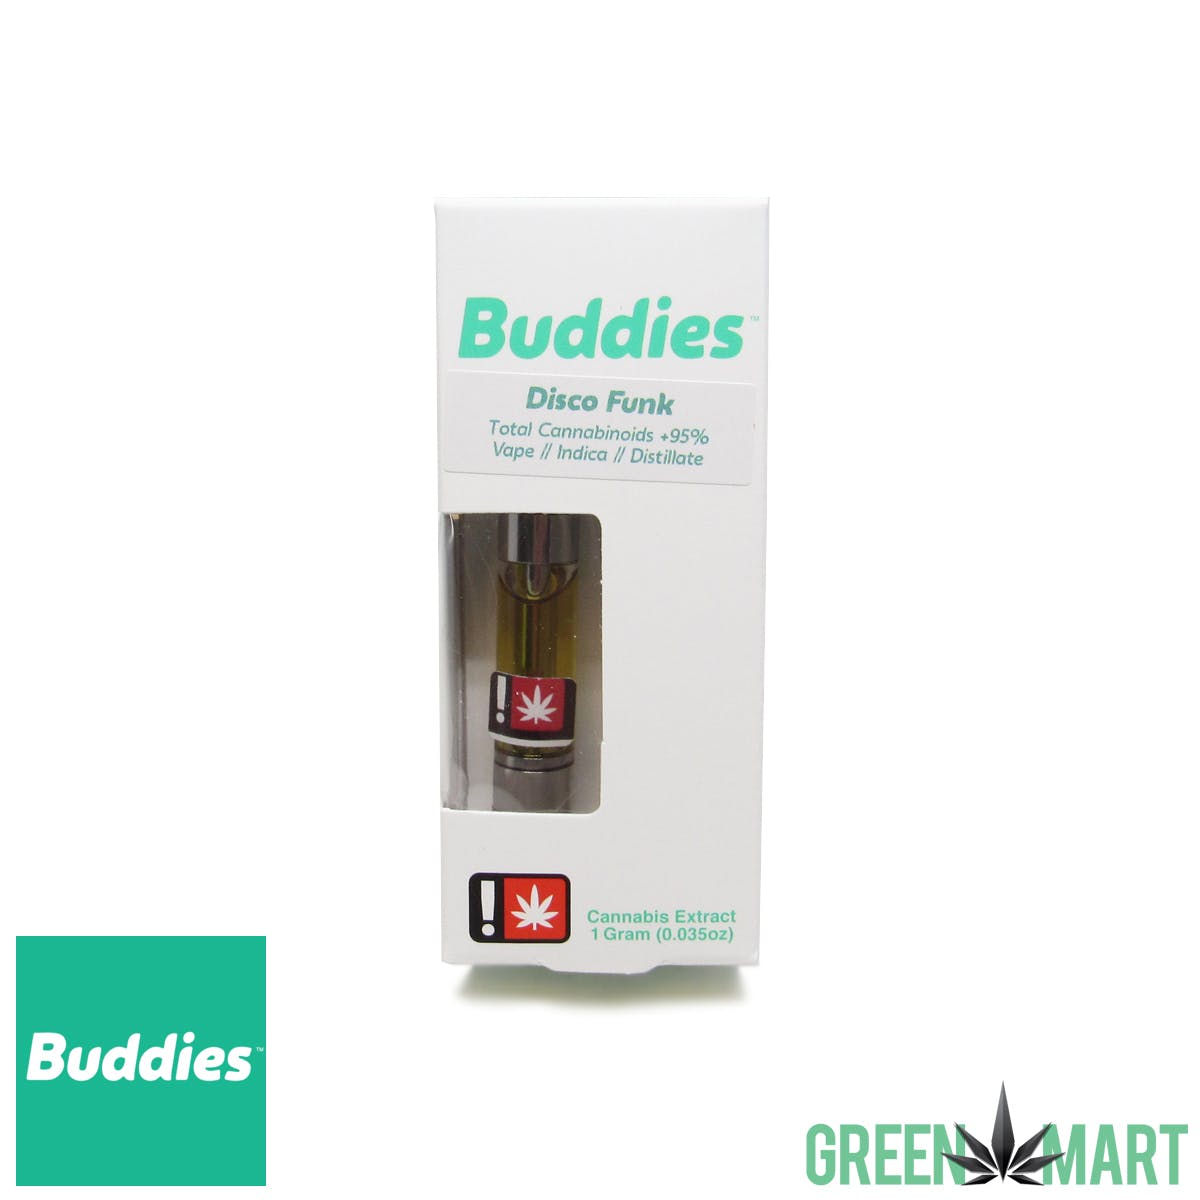 Buddies Brand Distillate Cartridge - Disco Funk